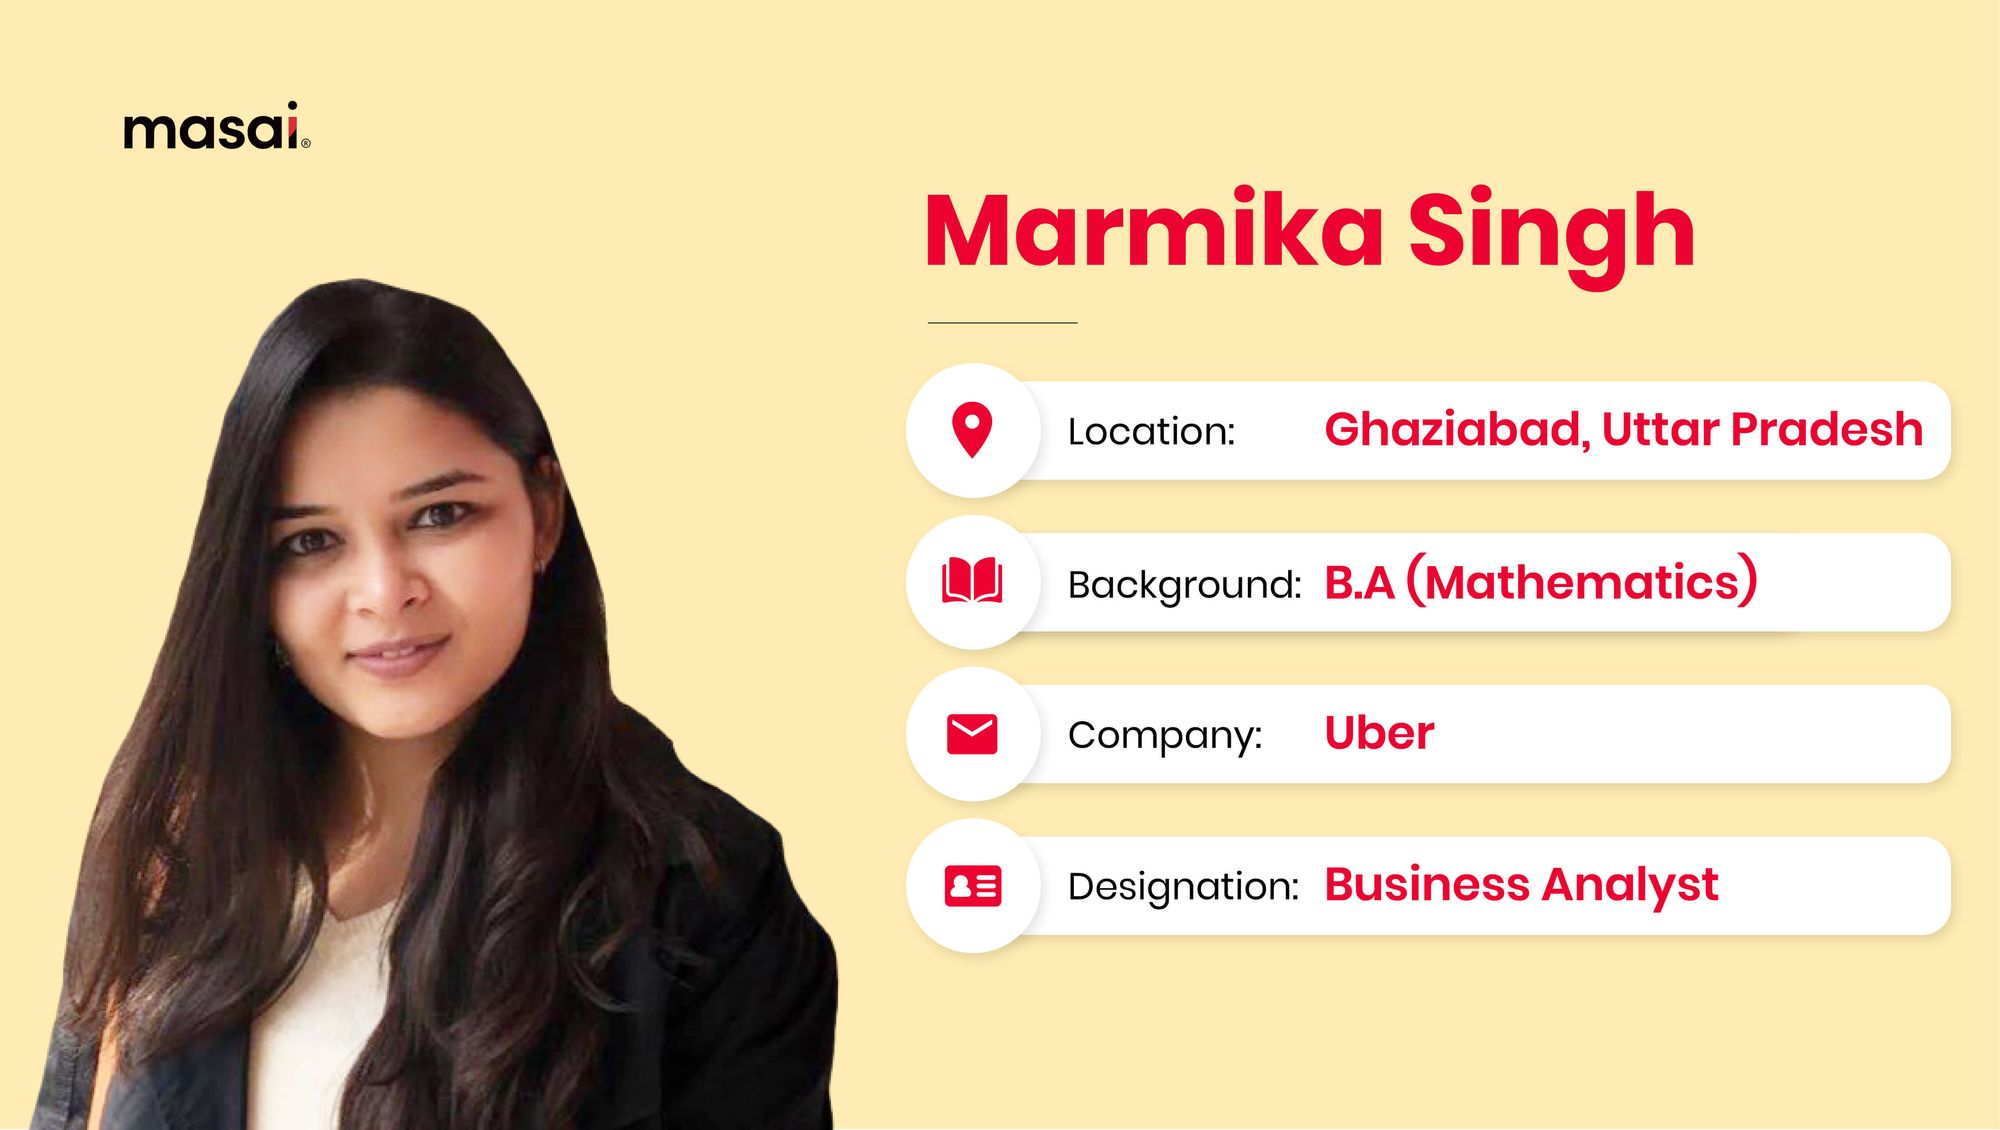 Marmika Singh- A Masai graduate now working at UBER